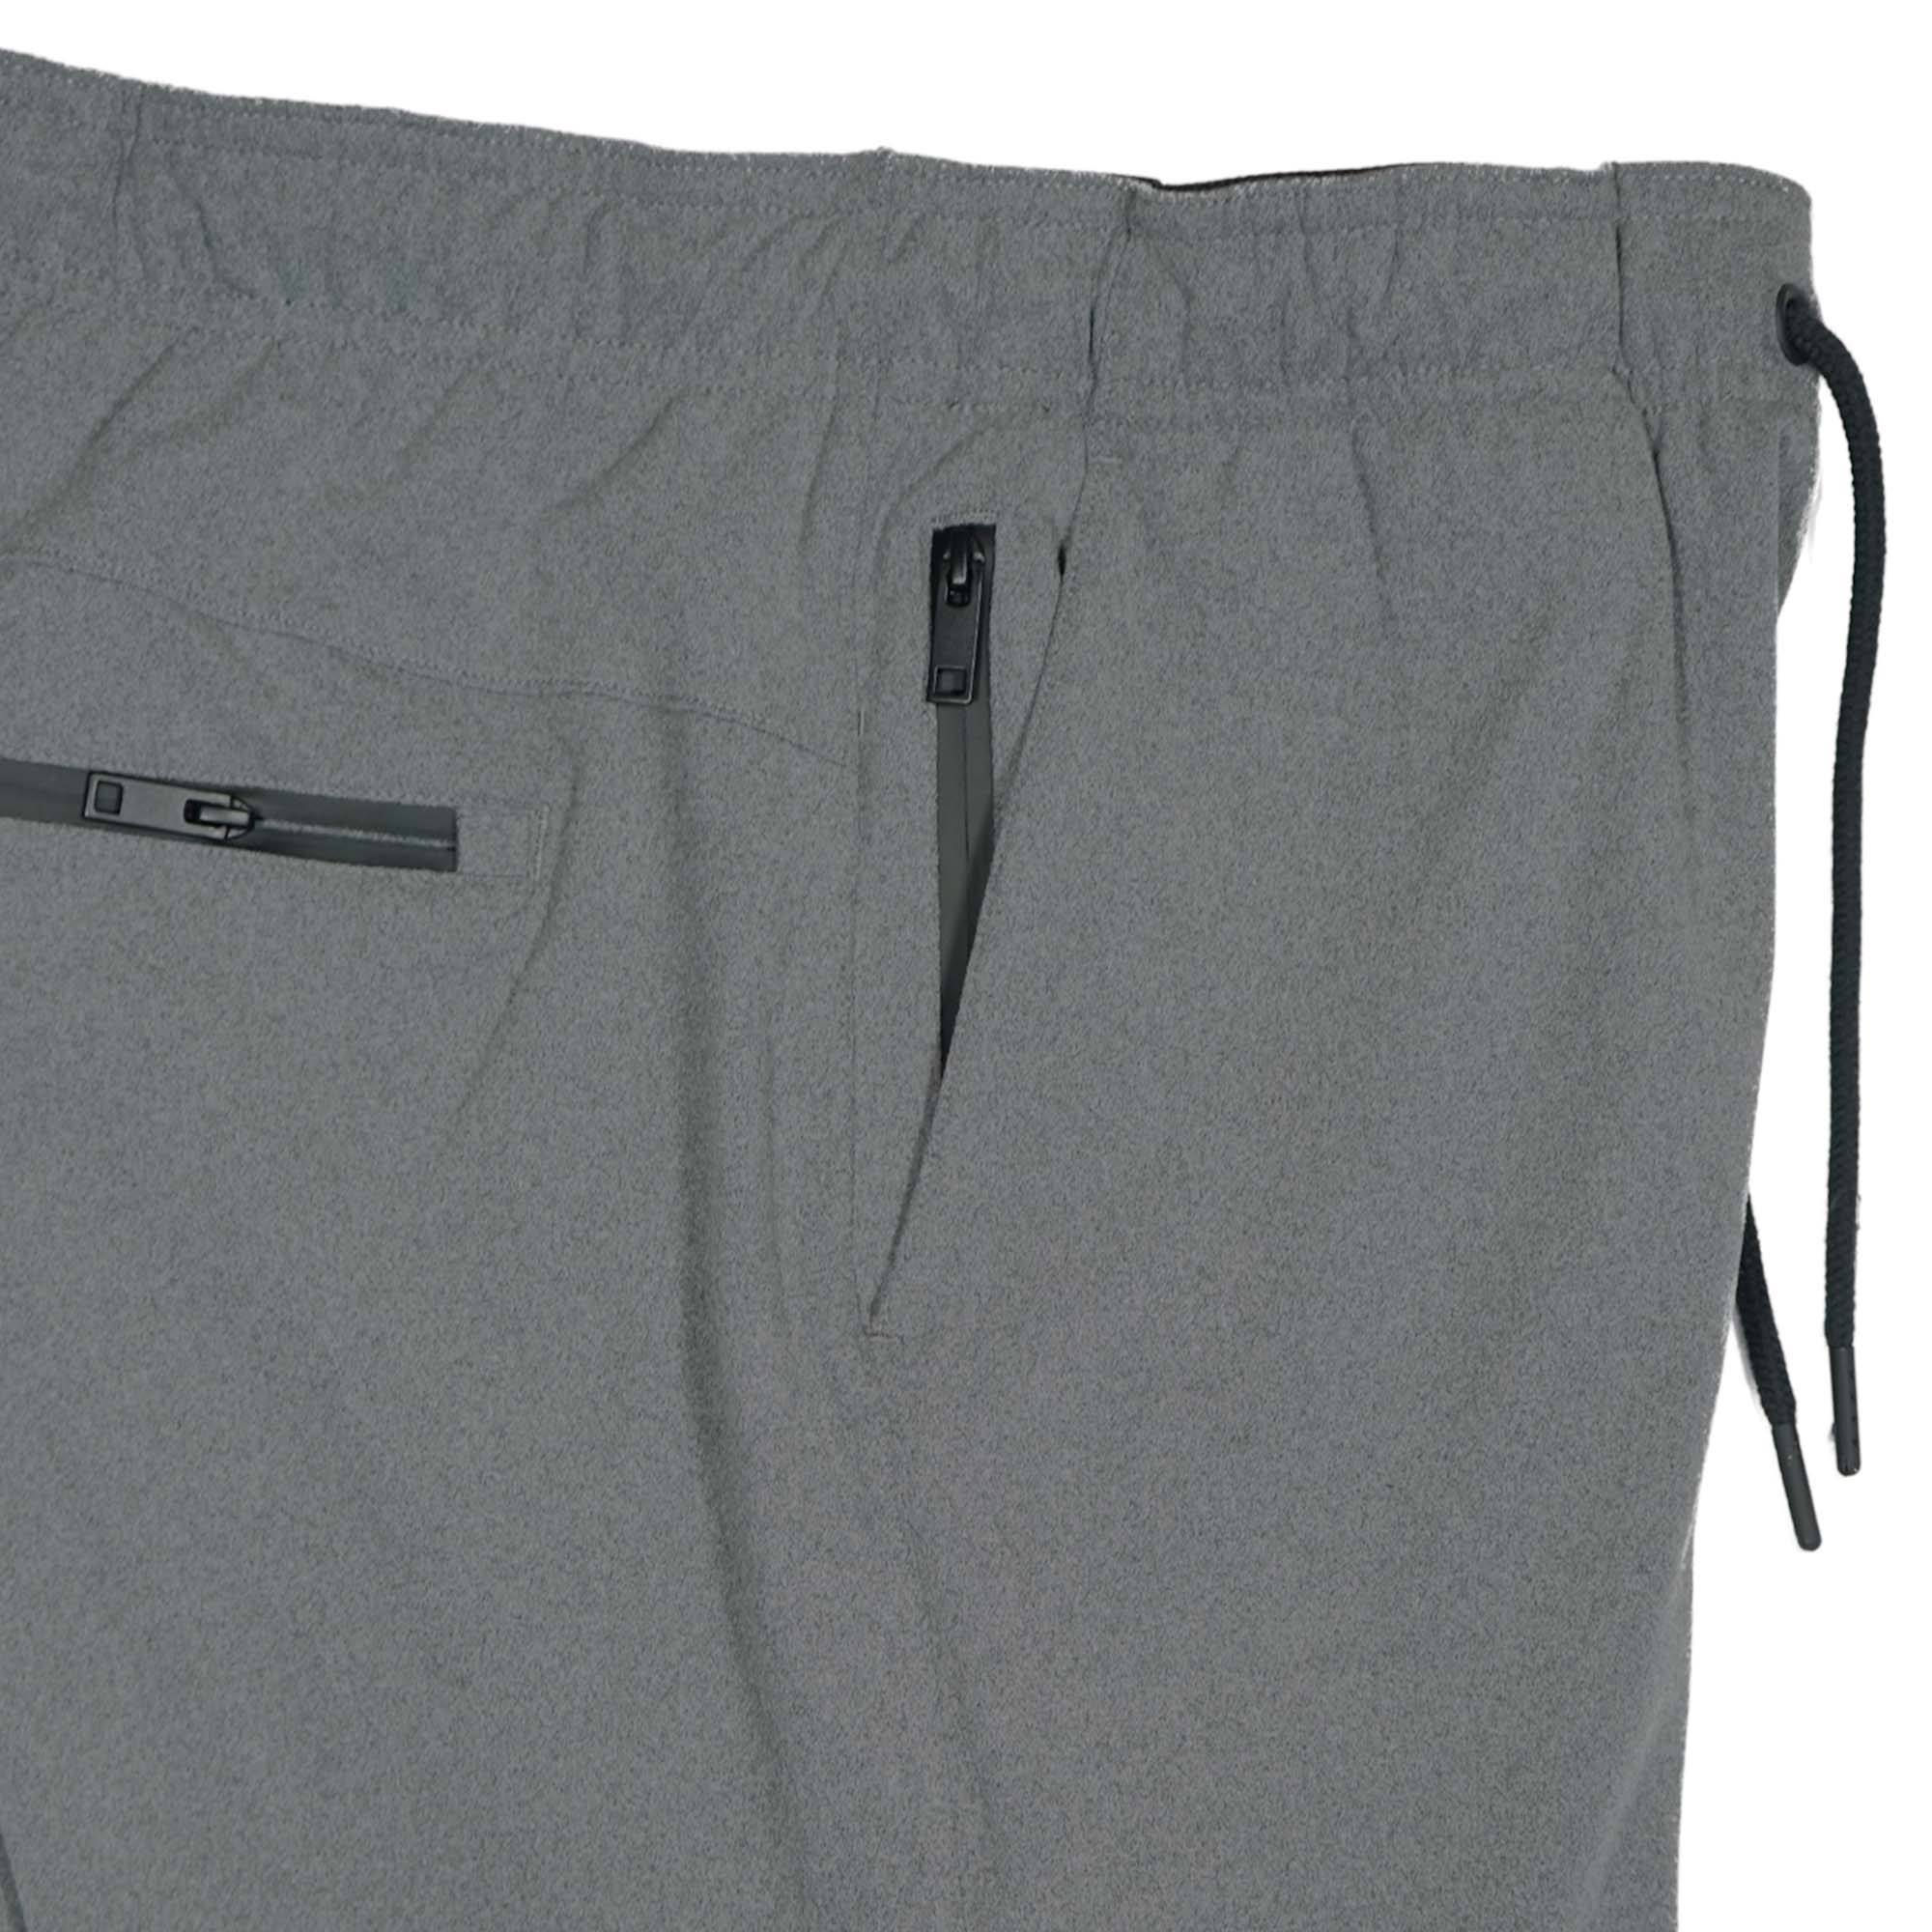 Lazy Daze Grey Shorts pocket closeup